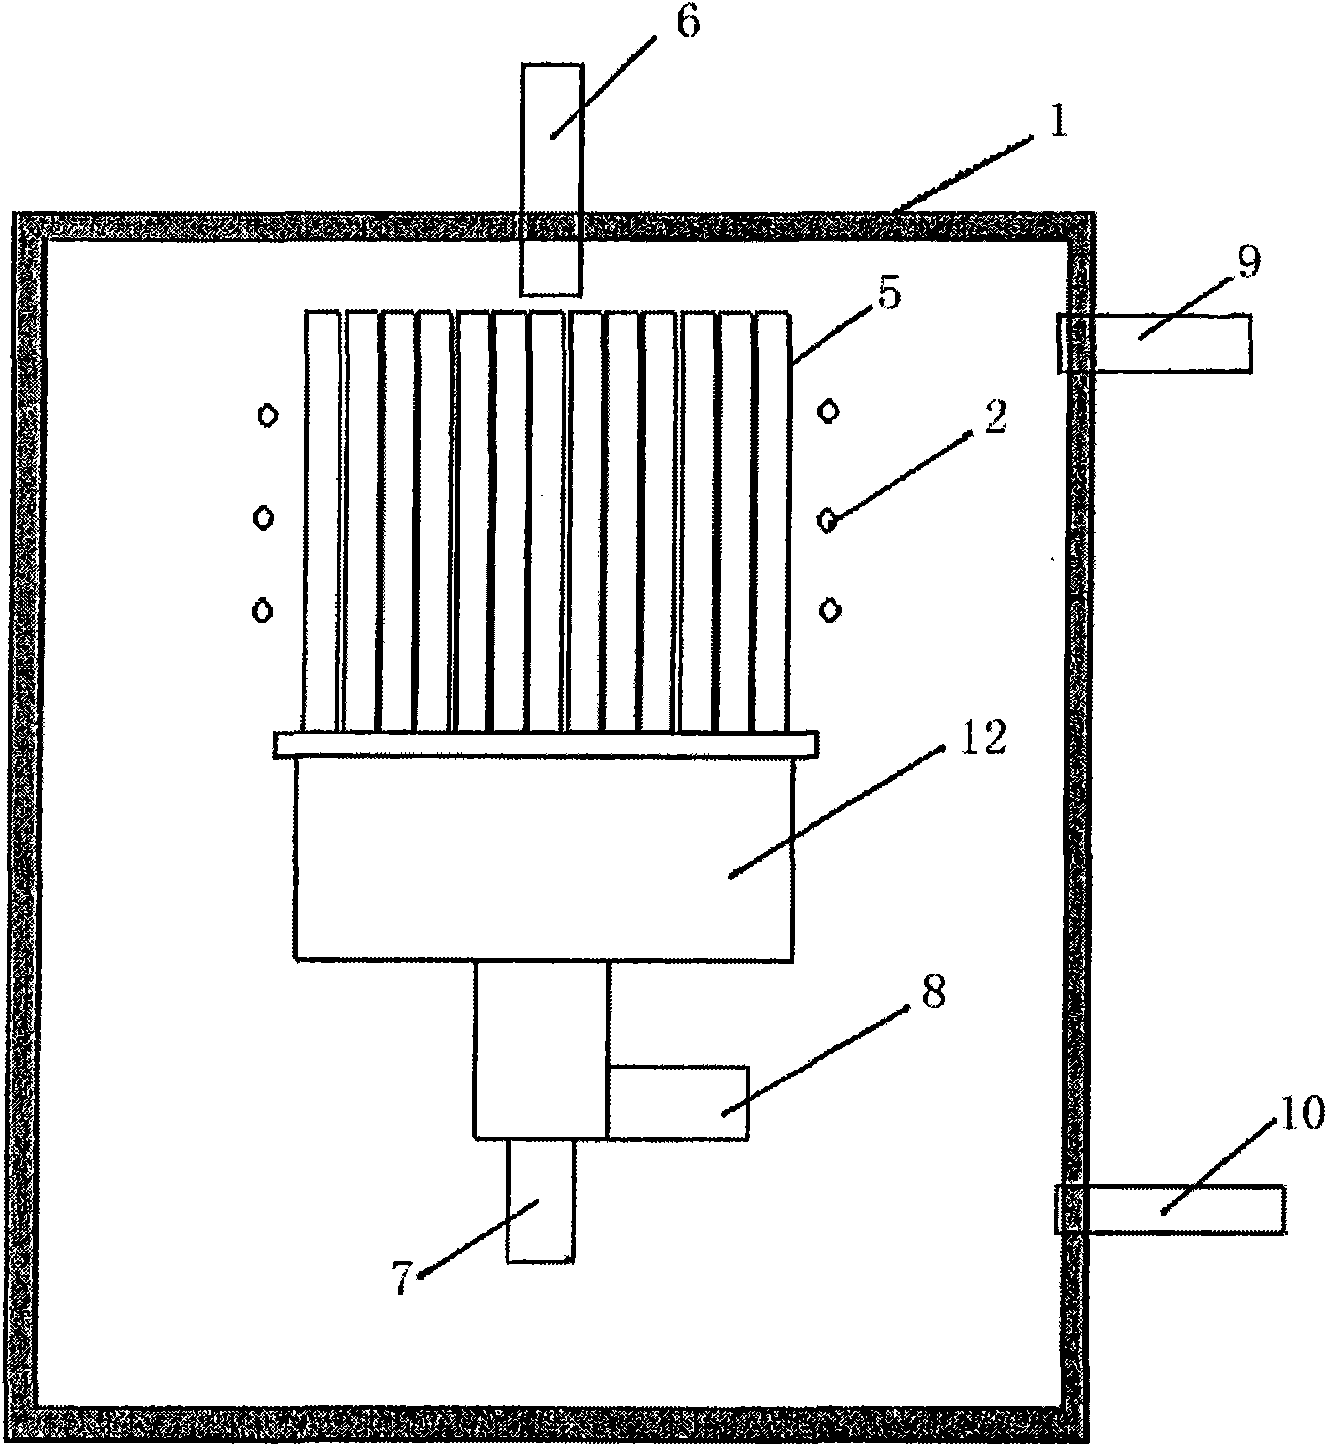 Polysilicon purification method and crucible and purification device used for polysilicon purification